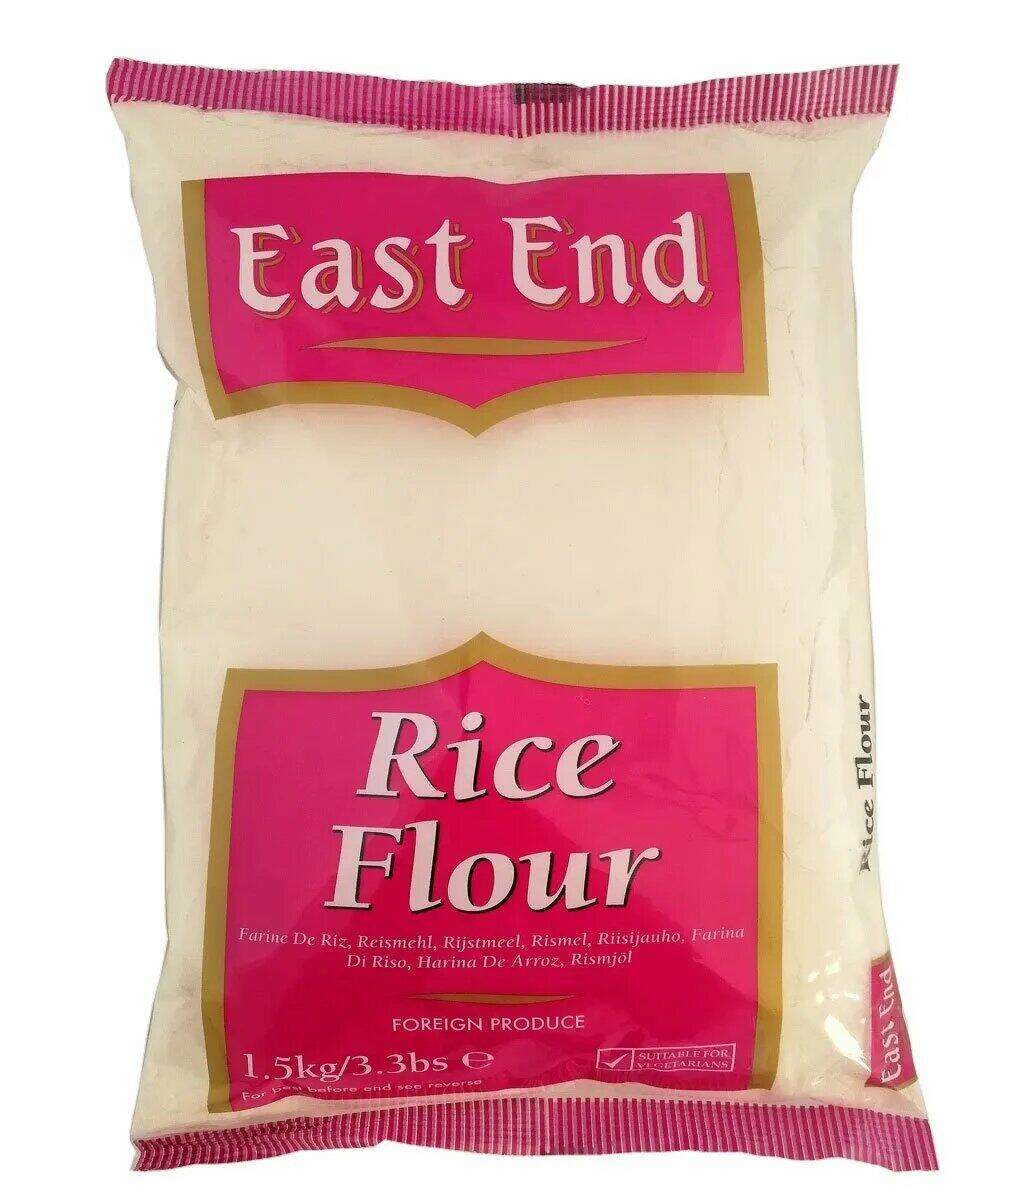 East End Rice Flour 1.5kg